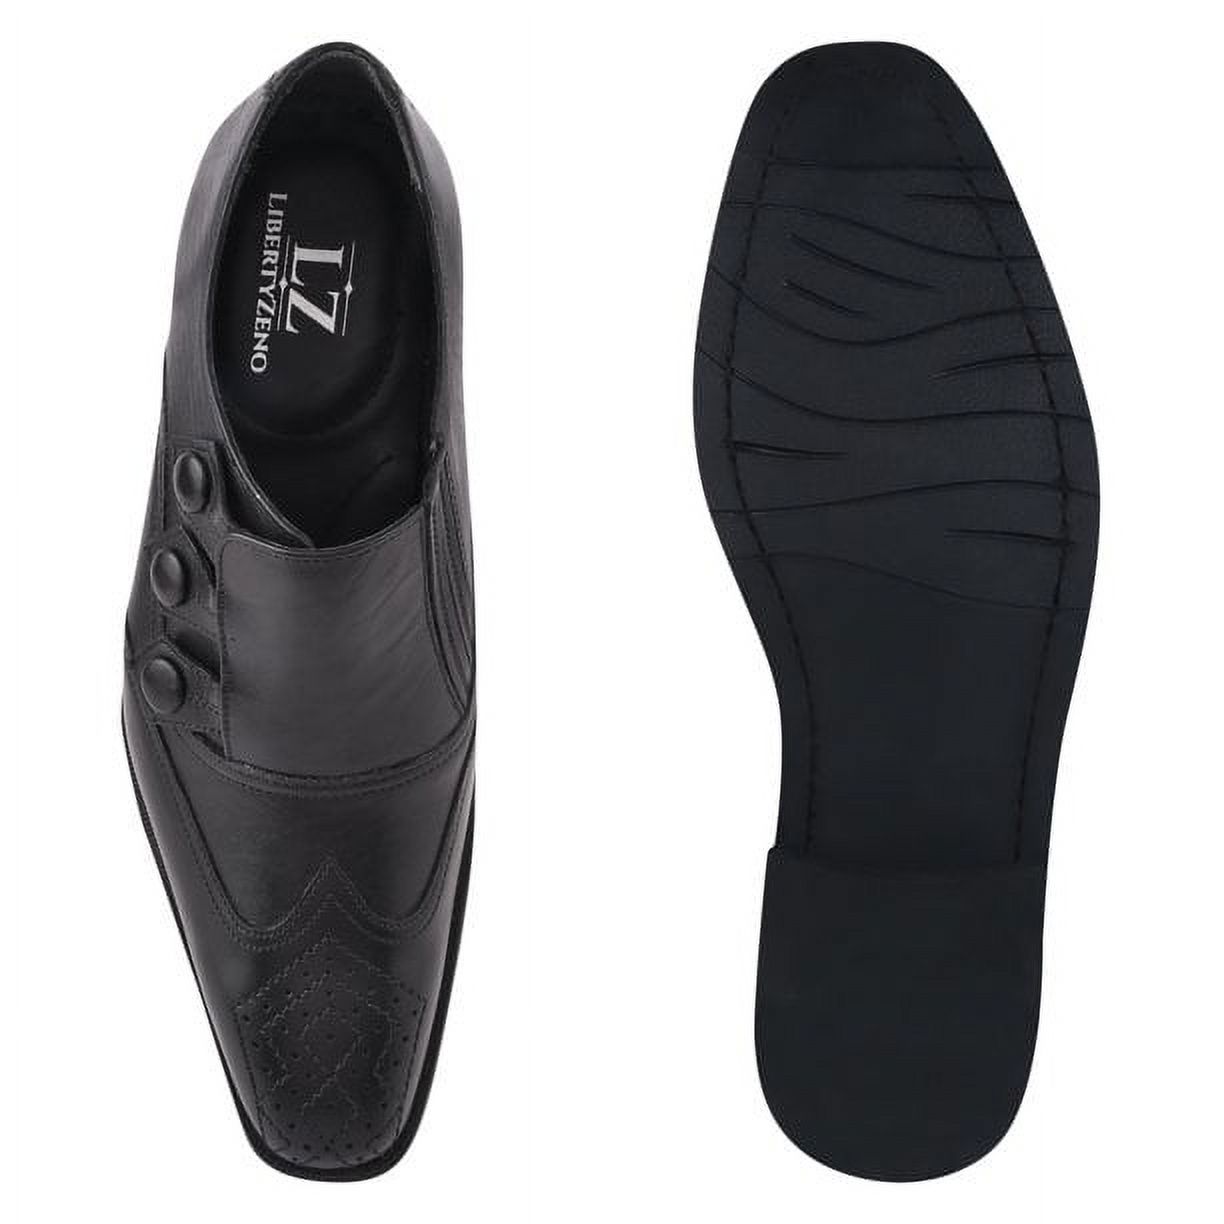 LIBERTYZENO Triple Monk Strap Slip-on Mens Leather Formal Wingtip Brogue Dress Shoes - image 5 of 6